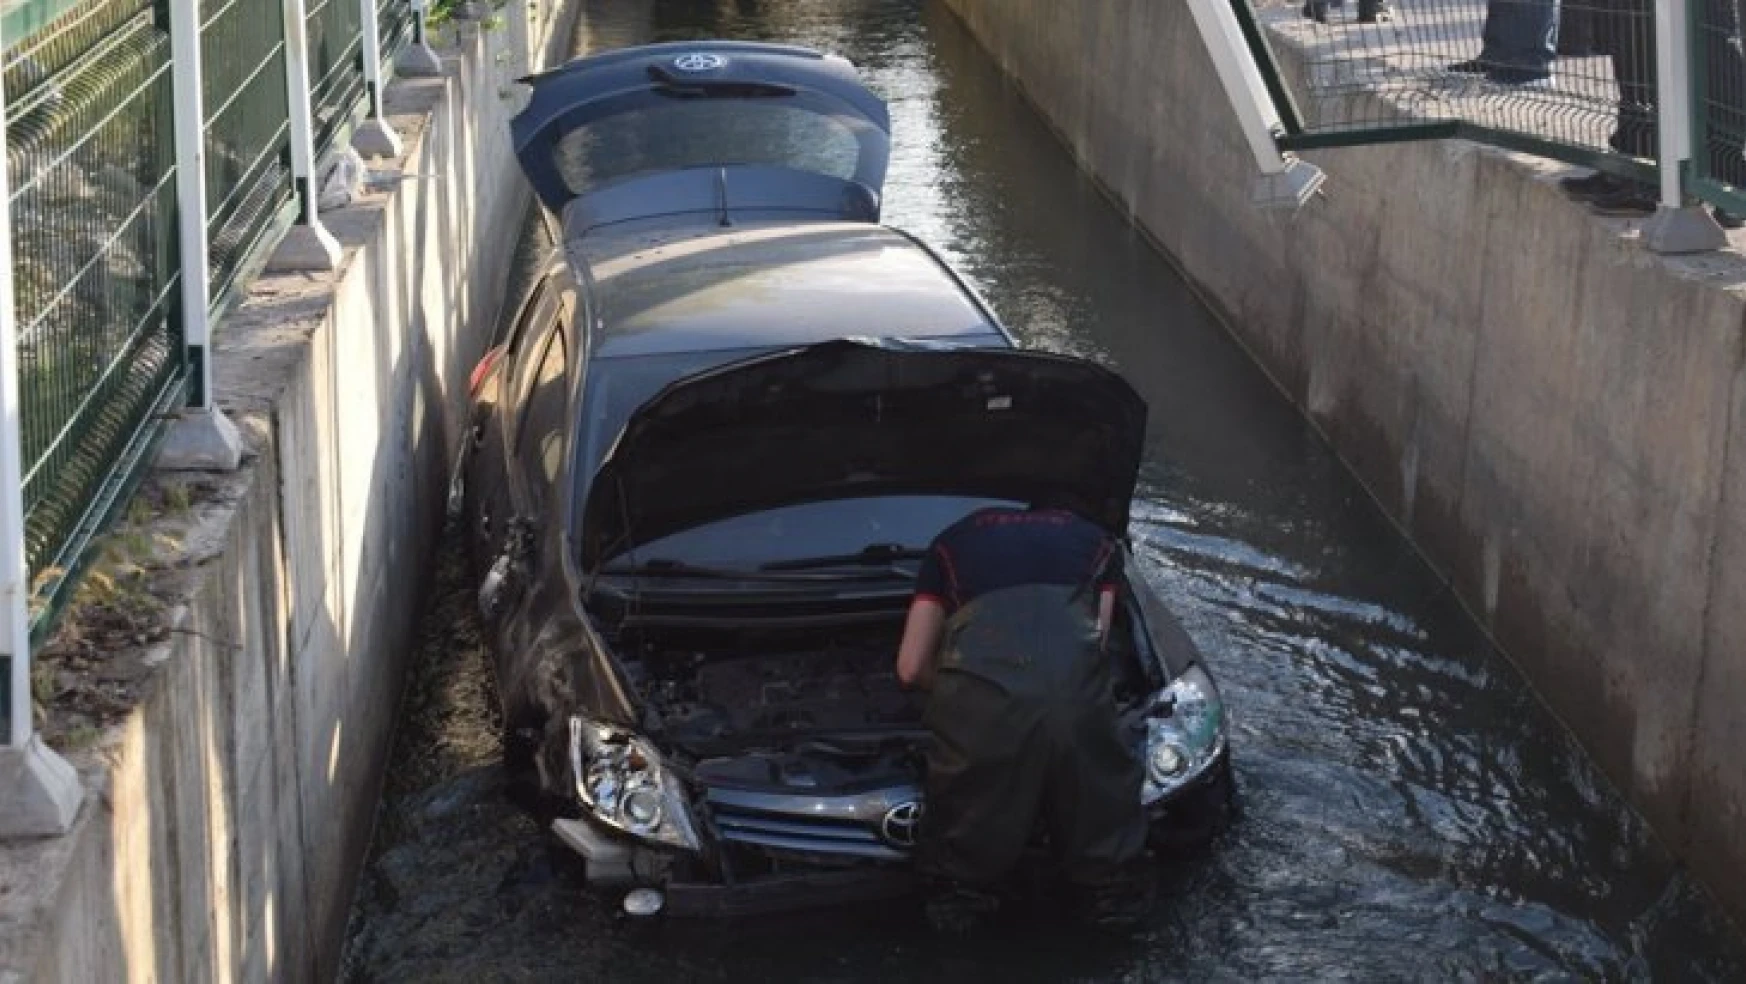 Otomobil sulama kanalına uçtu